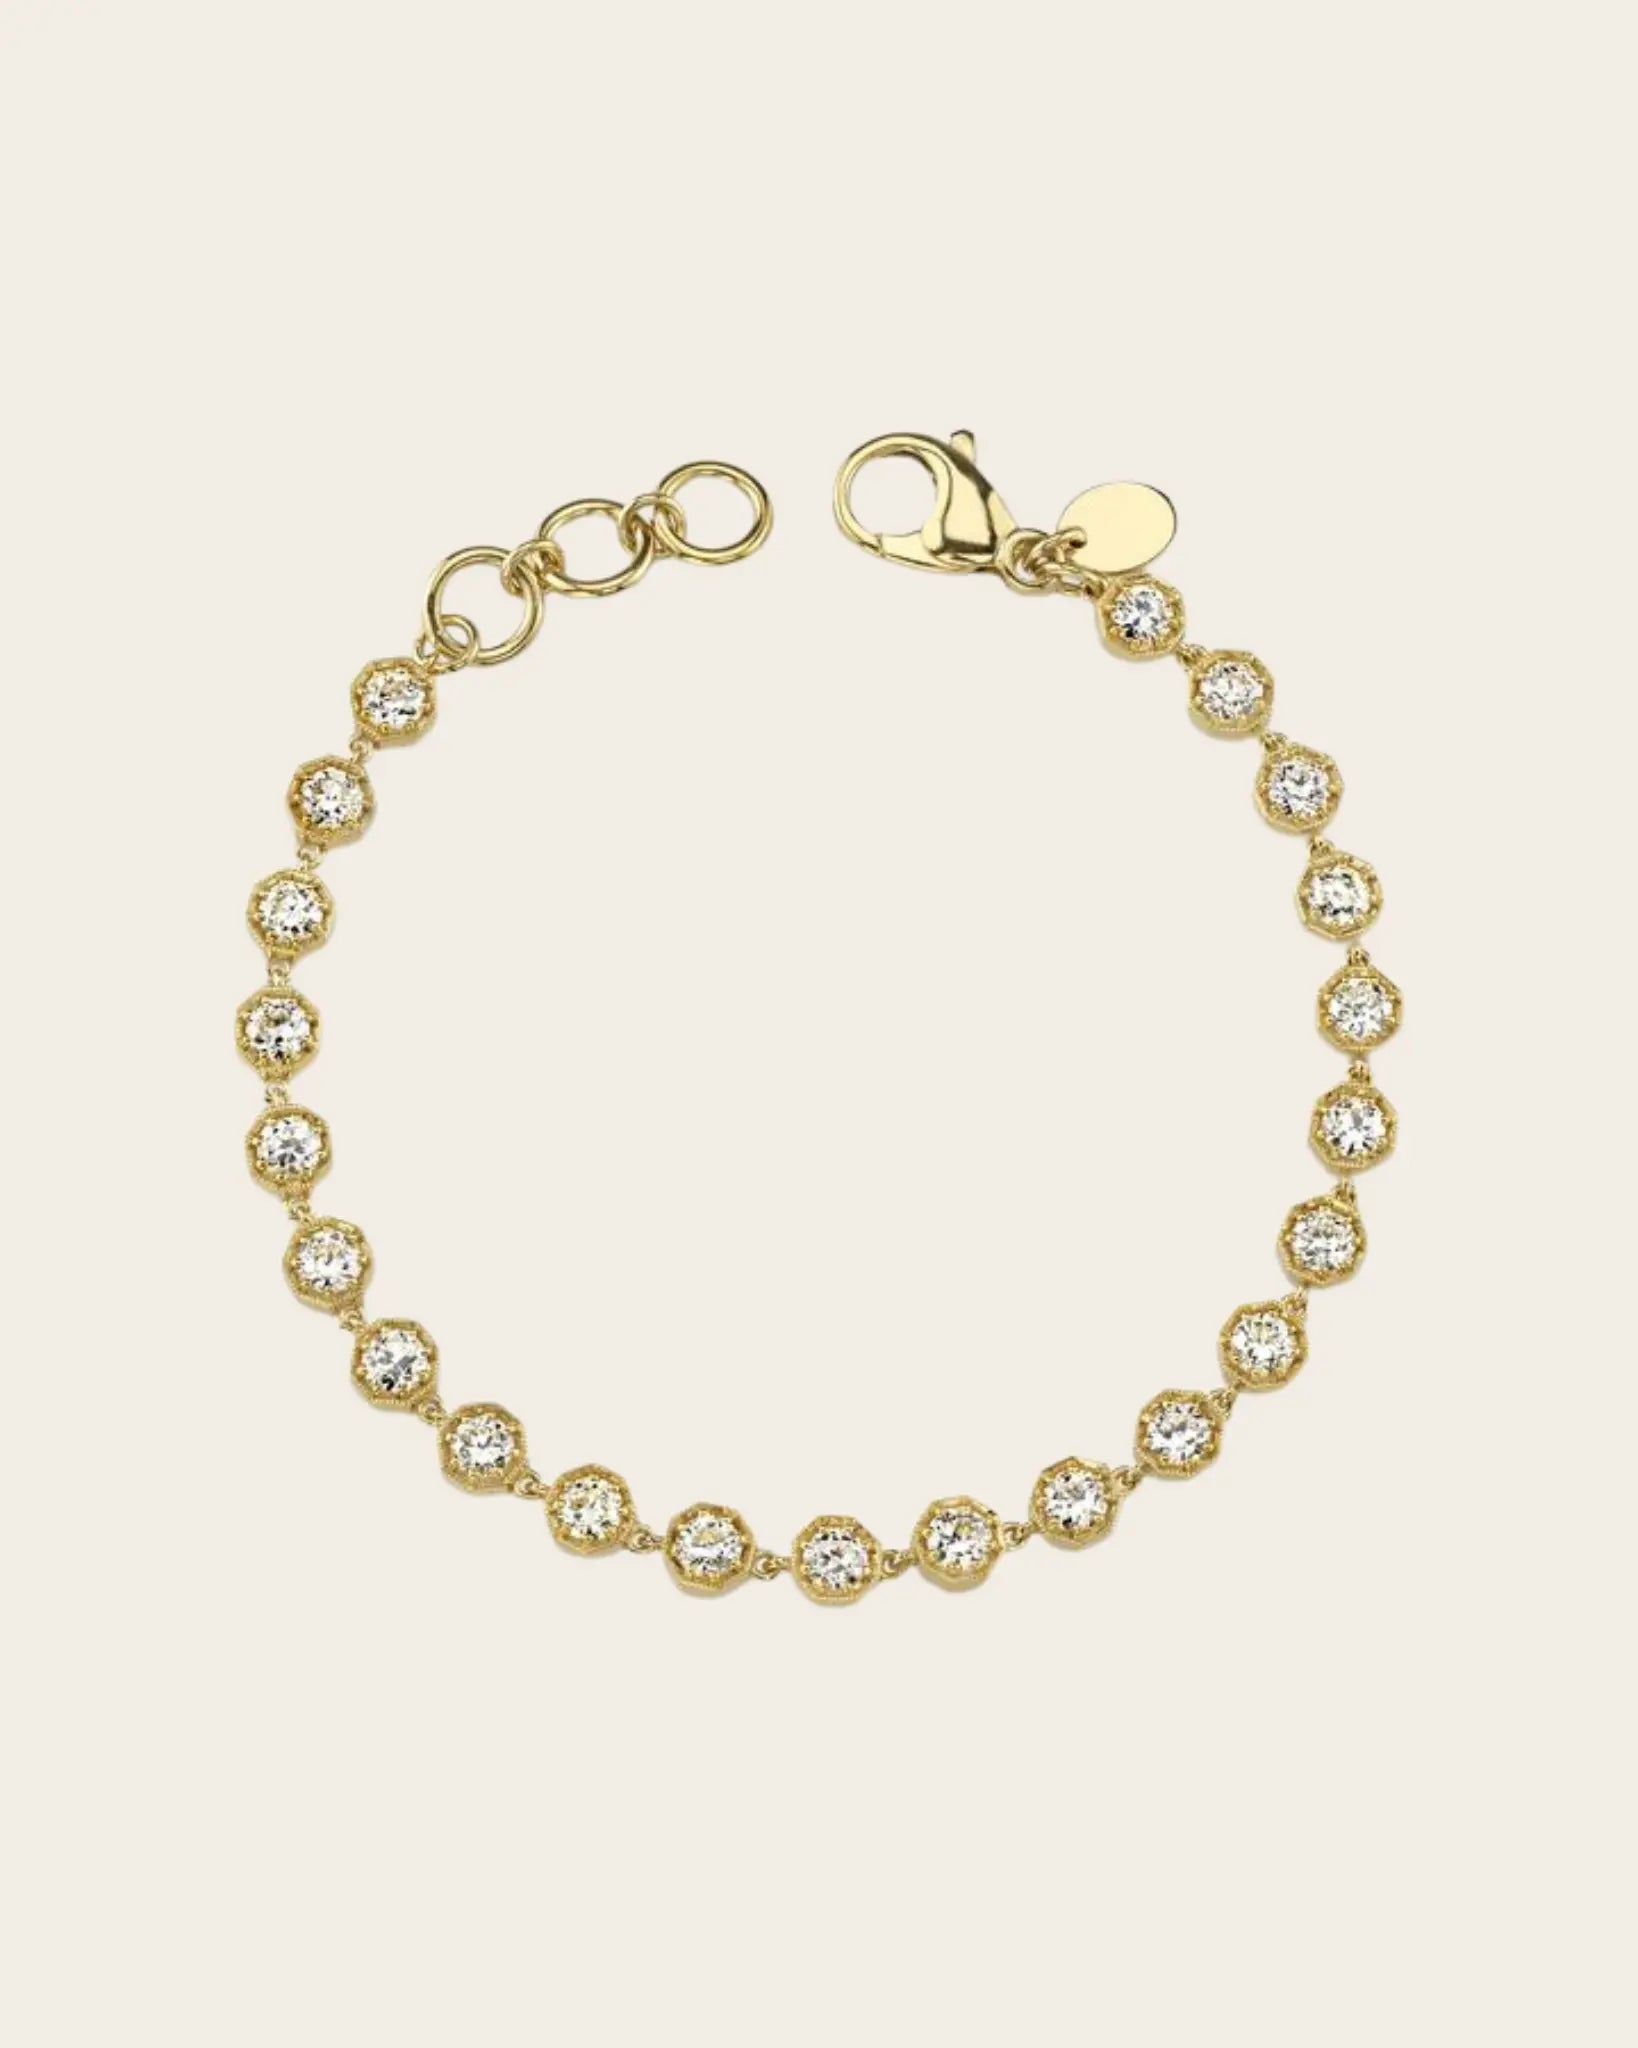 A gold diamond tennis bracelet by Single Stone.